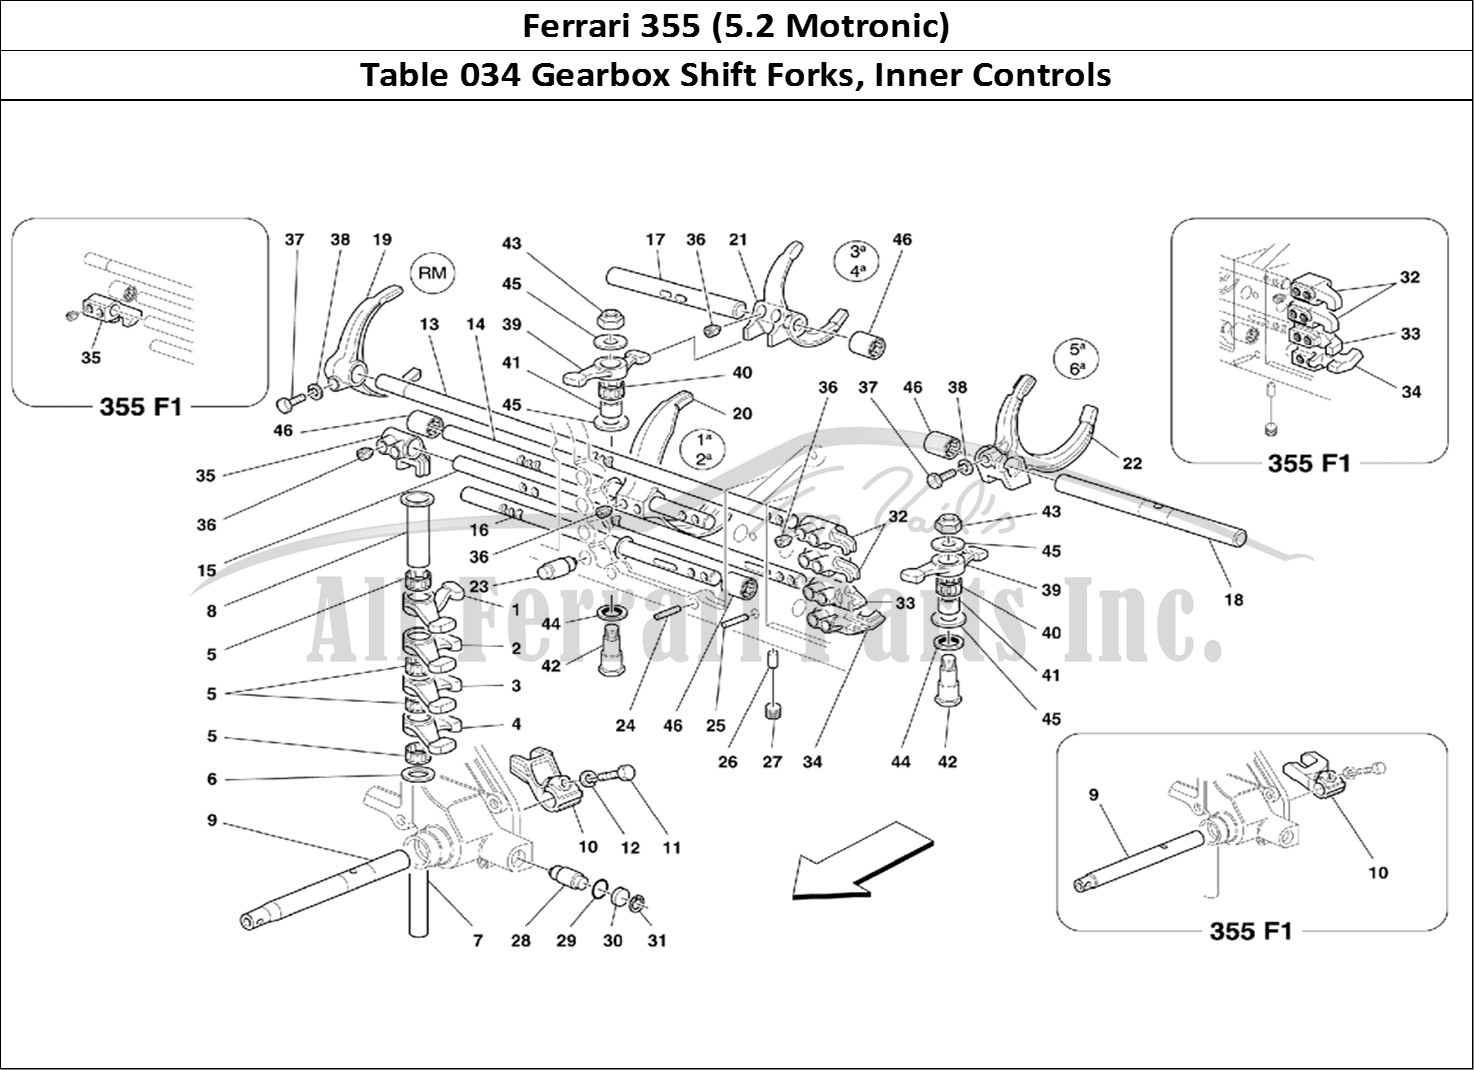 Ferrari Parts Ferrari 355 (5.2 Motronic) Page 034 Inside Gearbox Controls